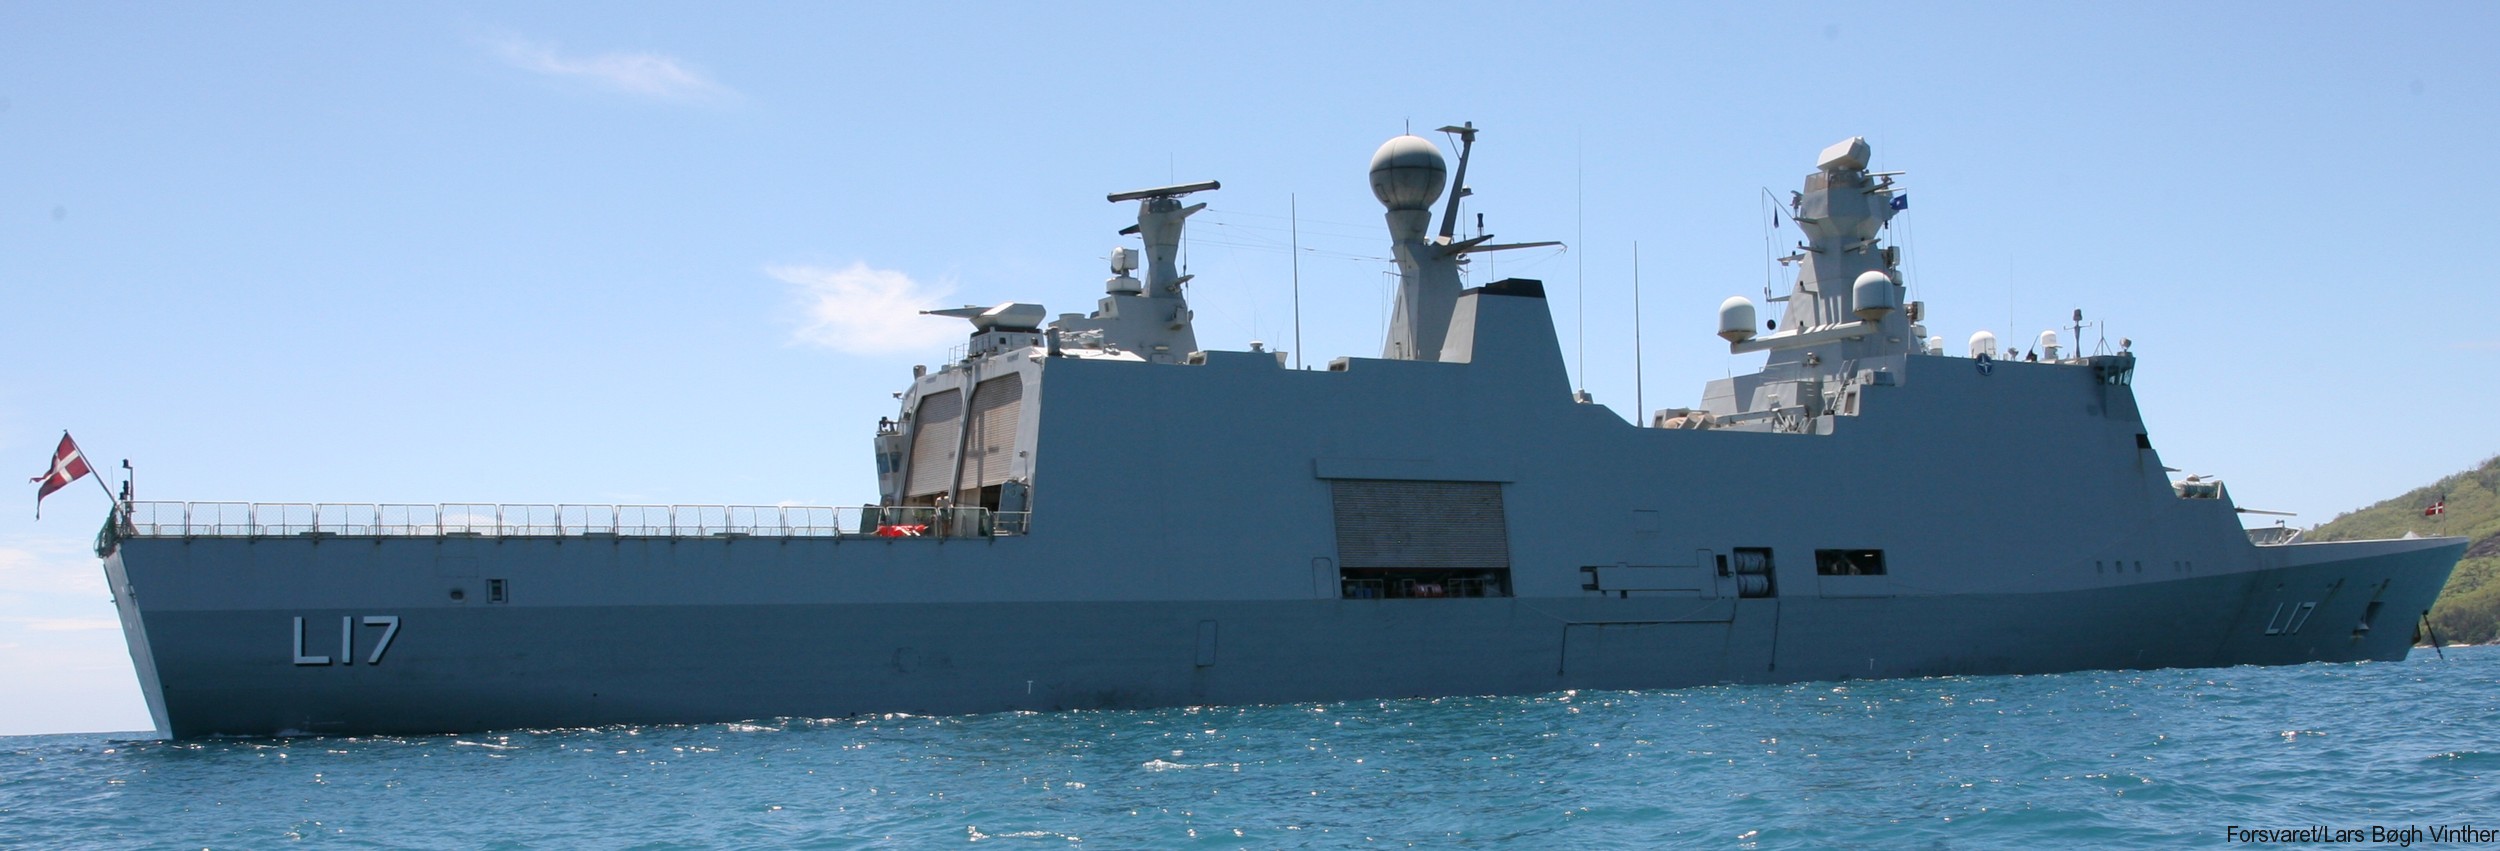 f-342 hdms esbern snare l-17 frigate command support ship royal danish navy 71